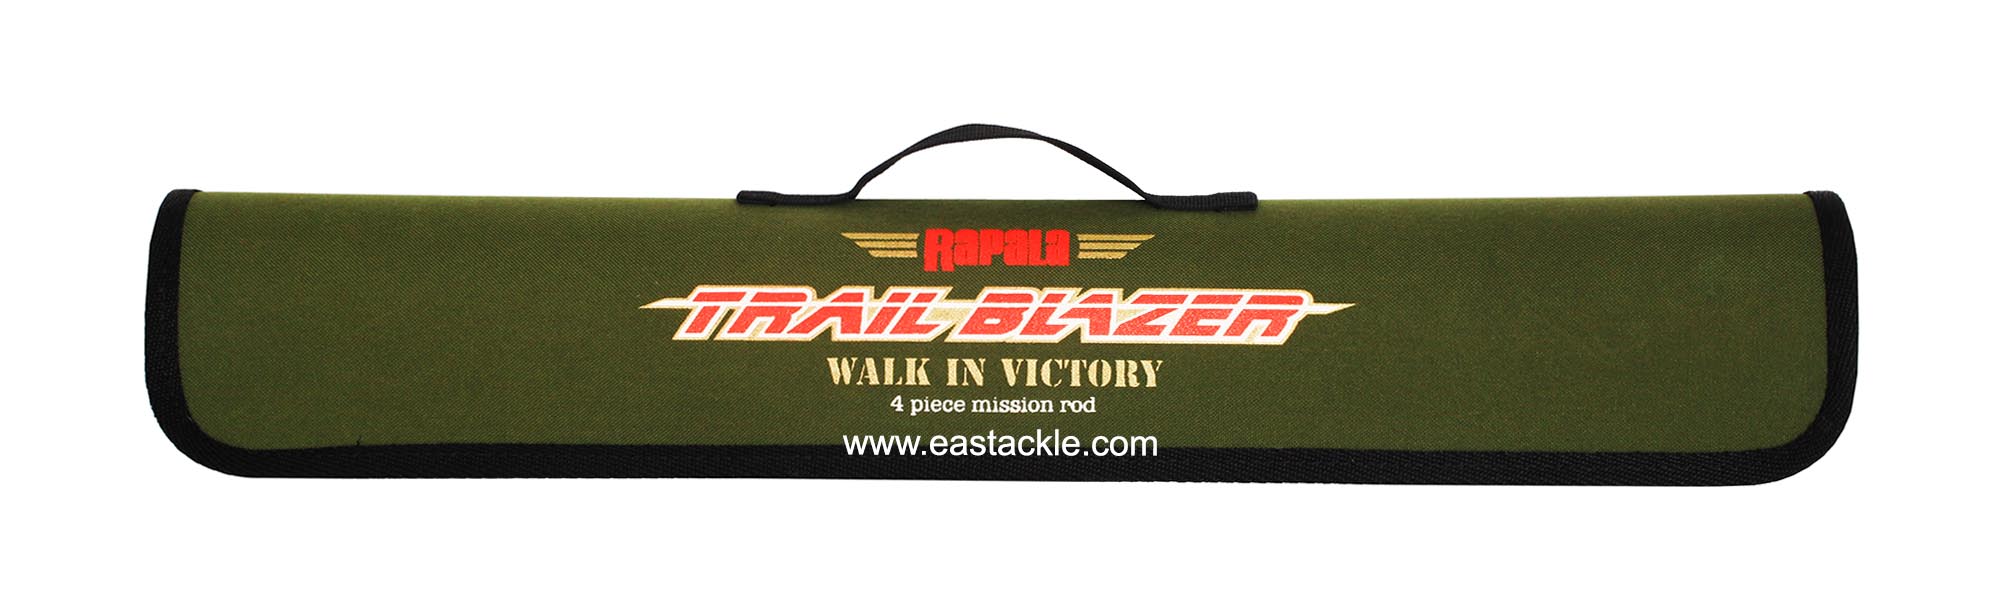 Rapala - Trail Blazer - TRS664LF - Spinning 4 Piece Travel Rod - Rod Bag | Eastackle